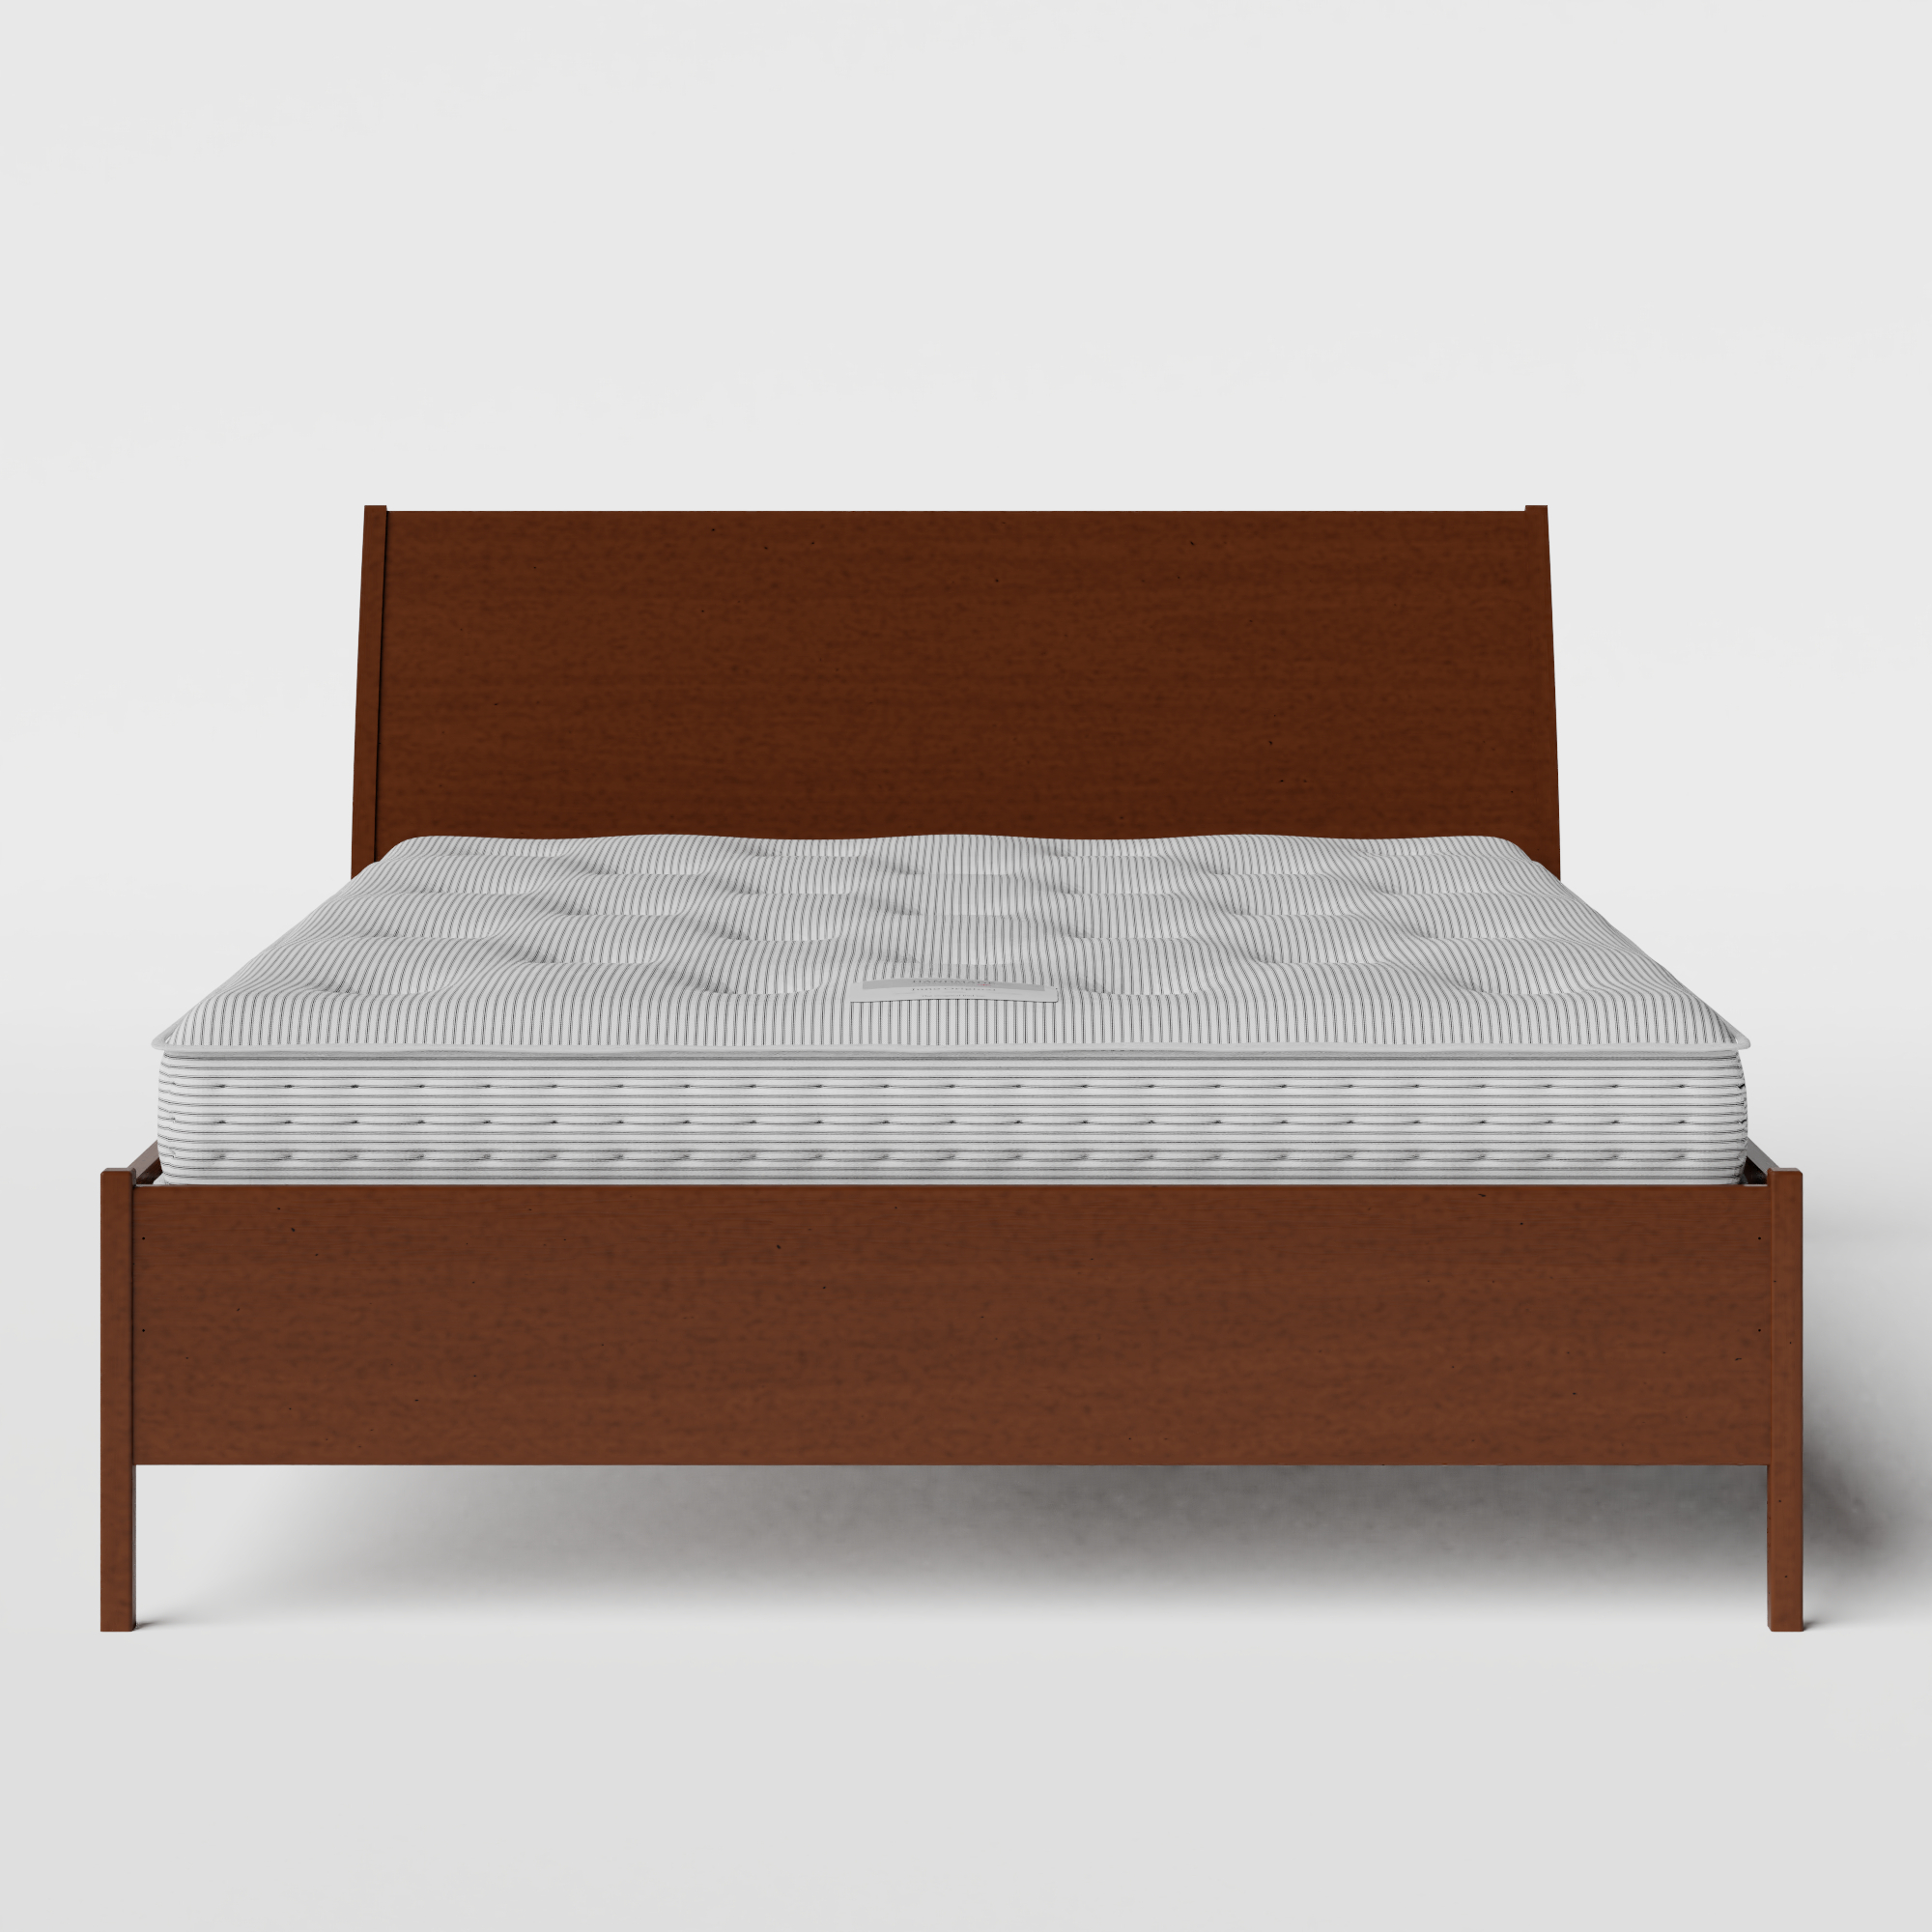 Hunt wood bed in dark cherry with Juno mattress